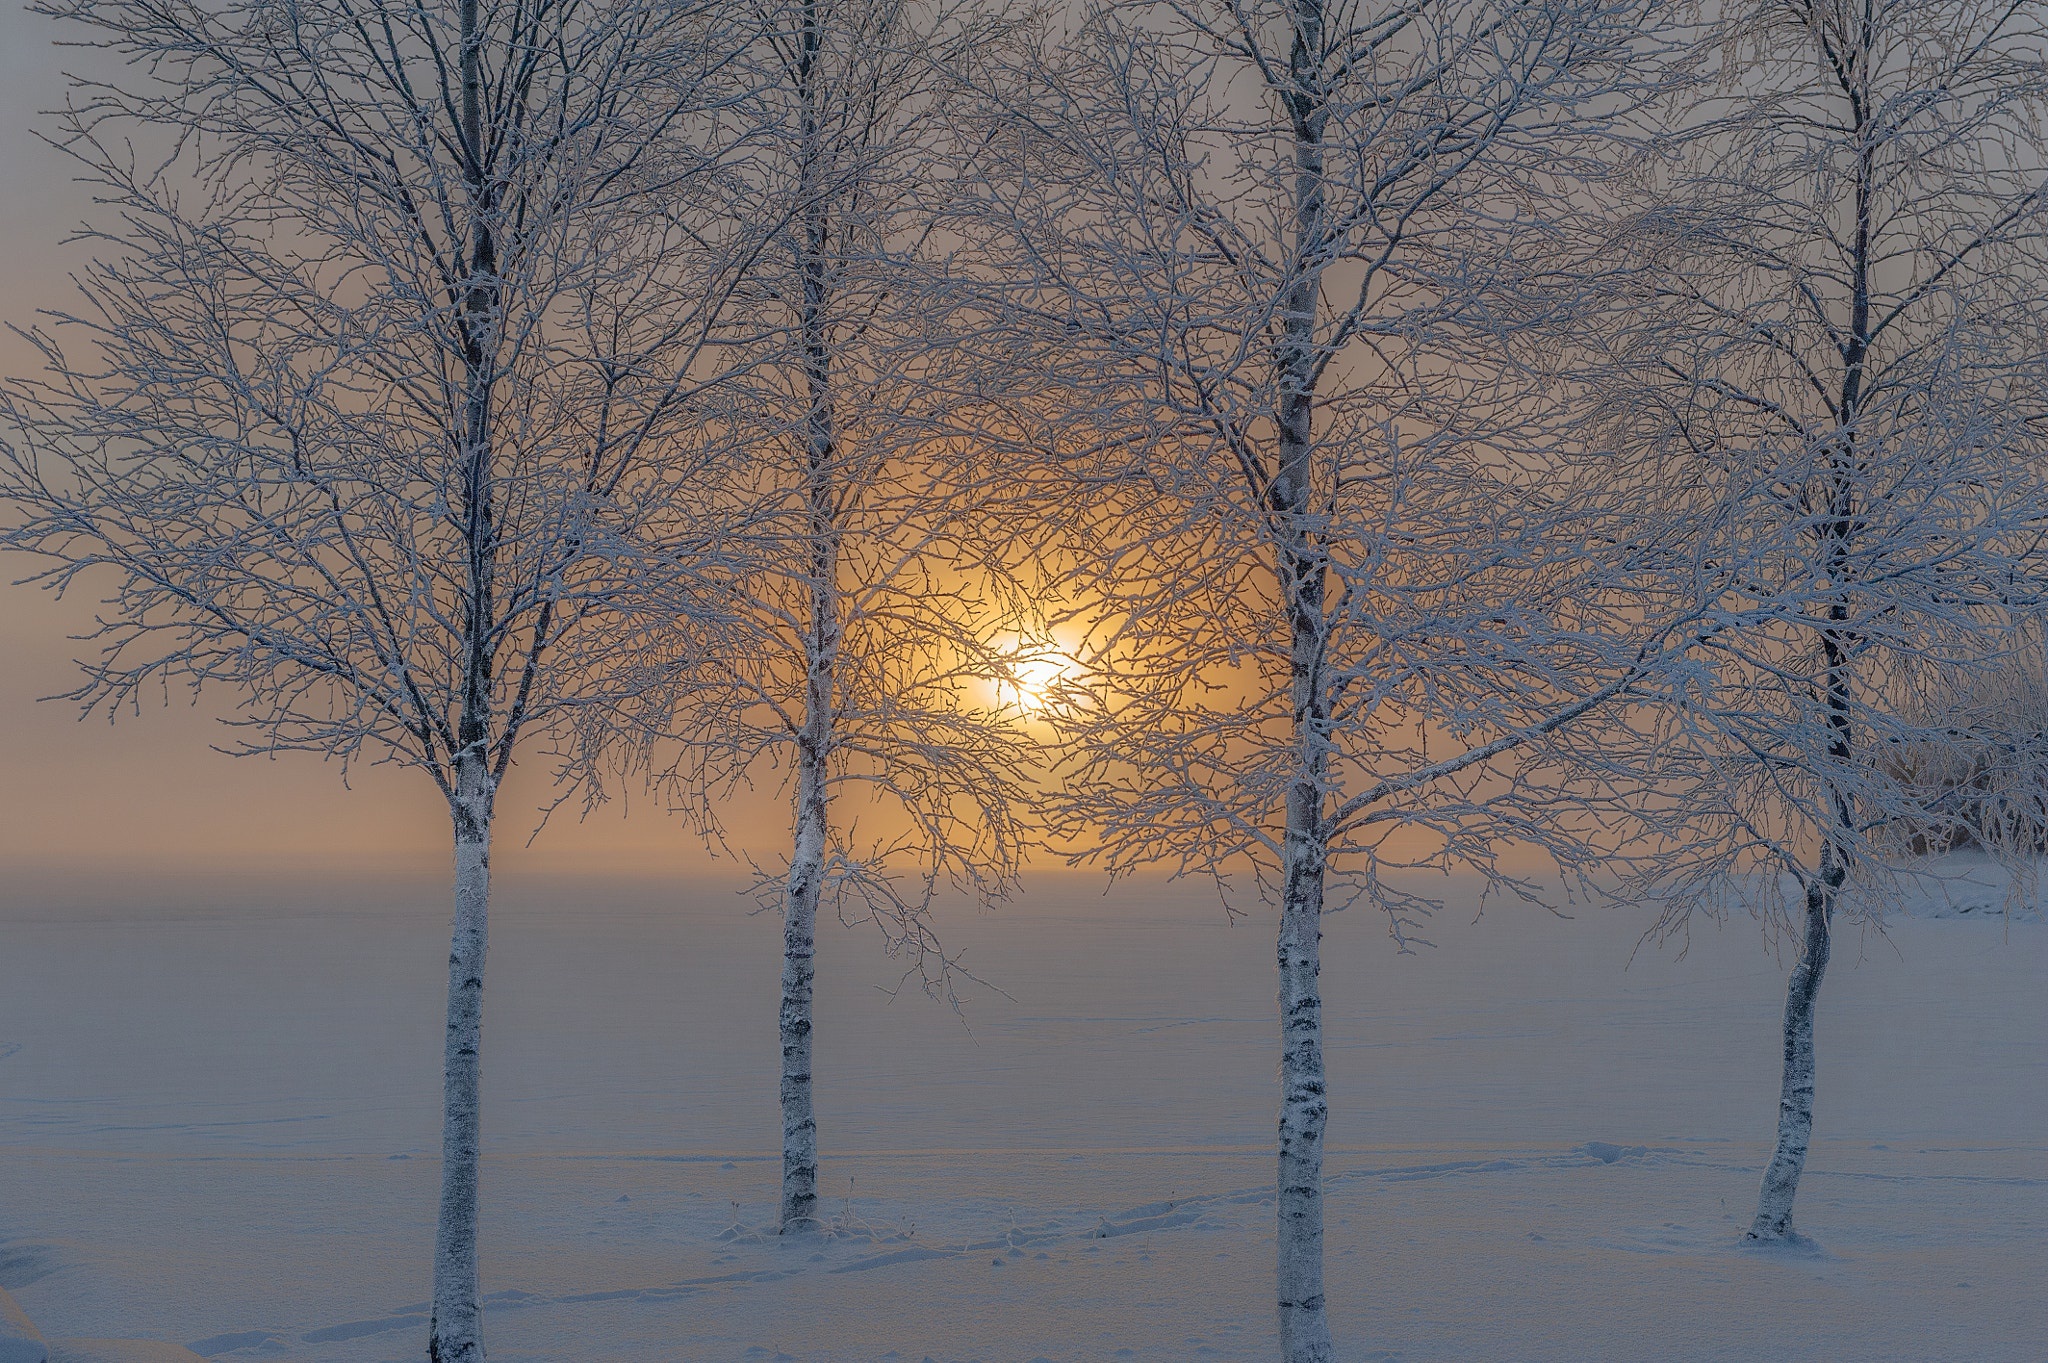 Солнце зимою слова. Иней на деревьях. Зима солнце. Деревья в инее и солнце. Солнце светит зимой.